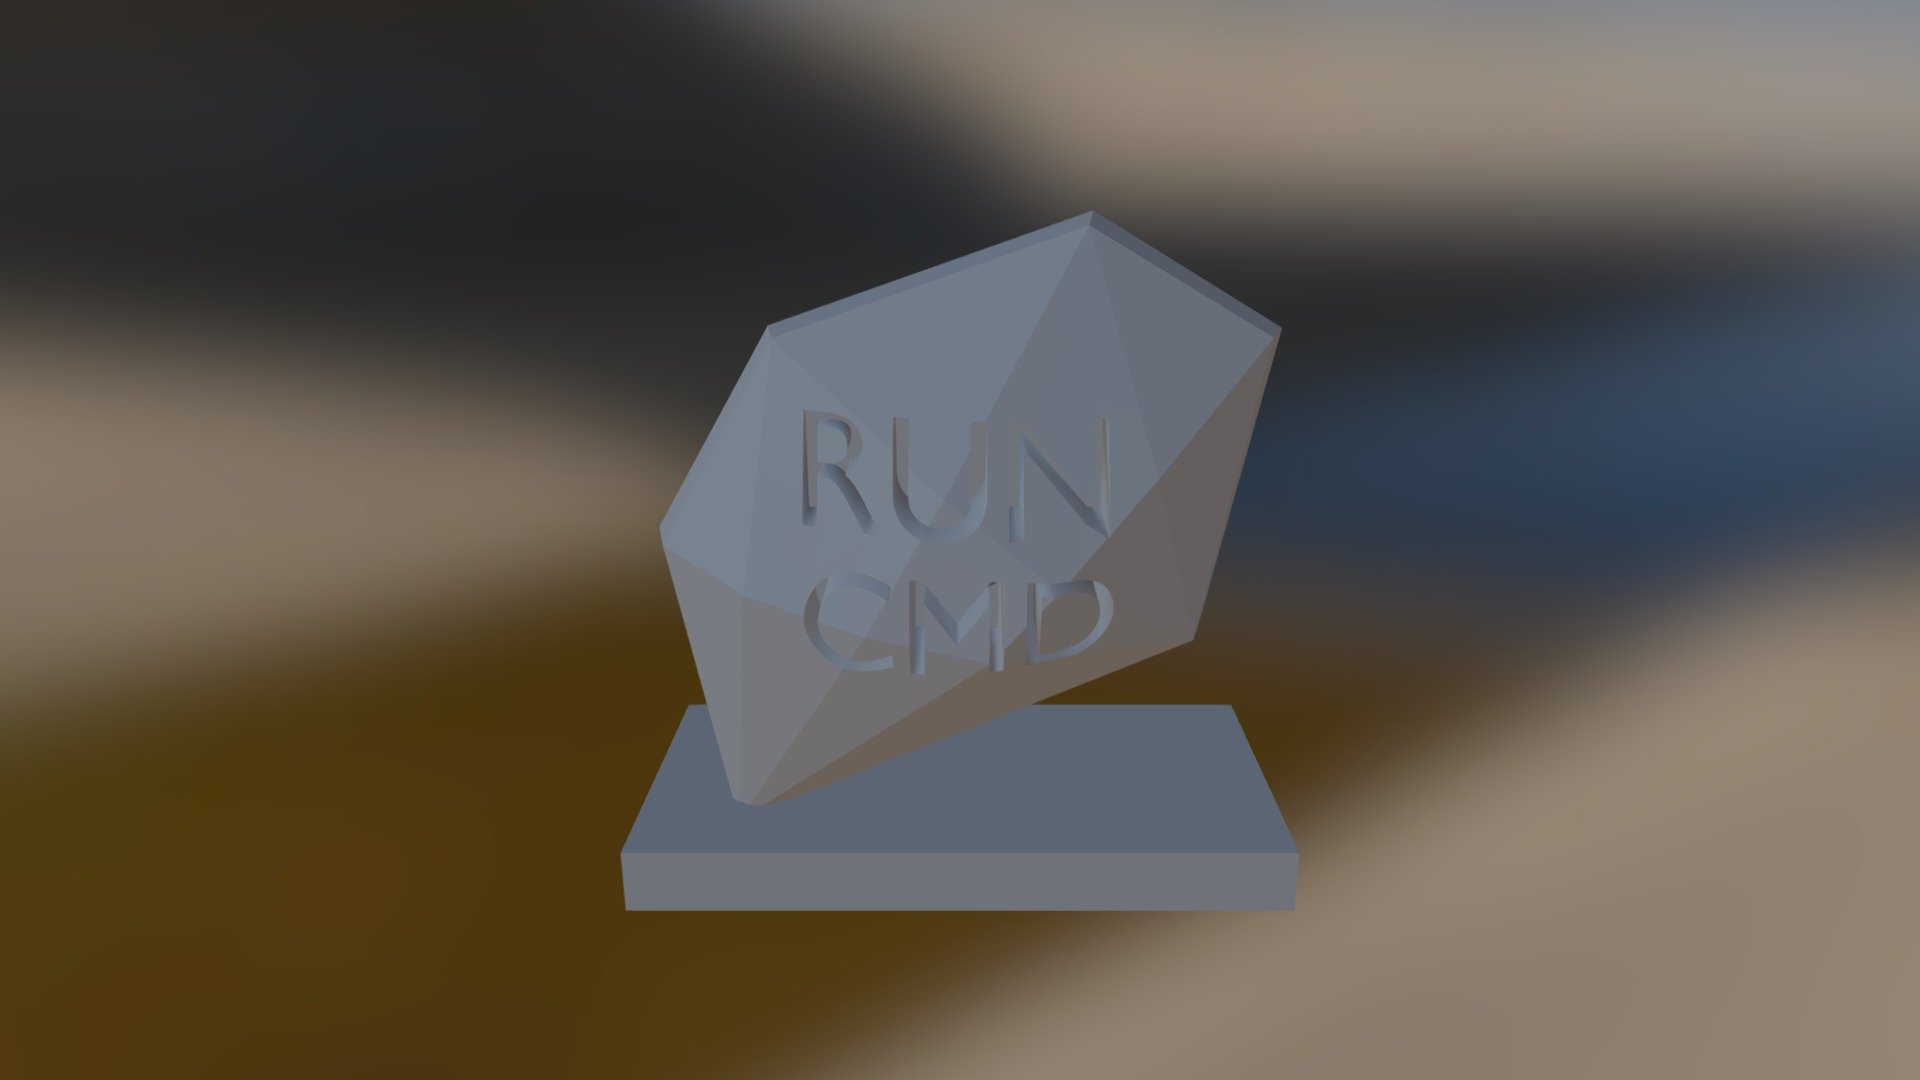 Run CMD